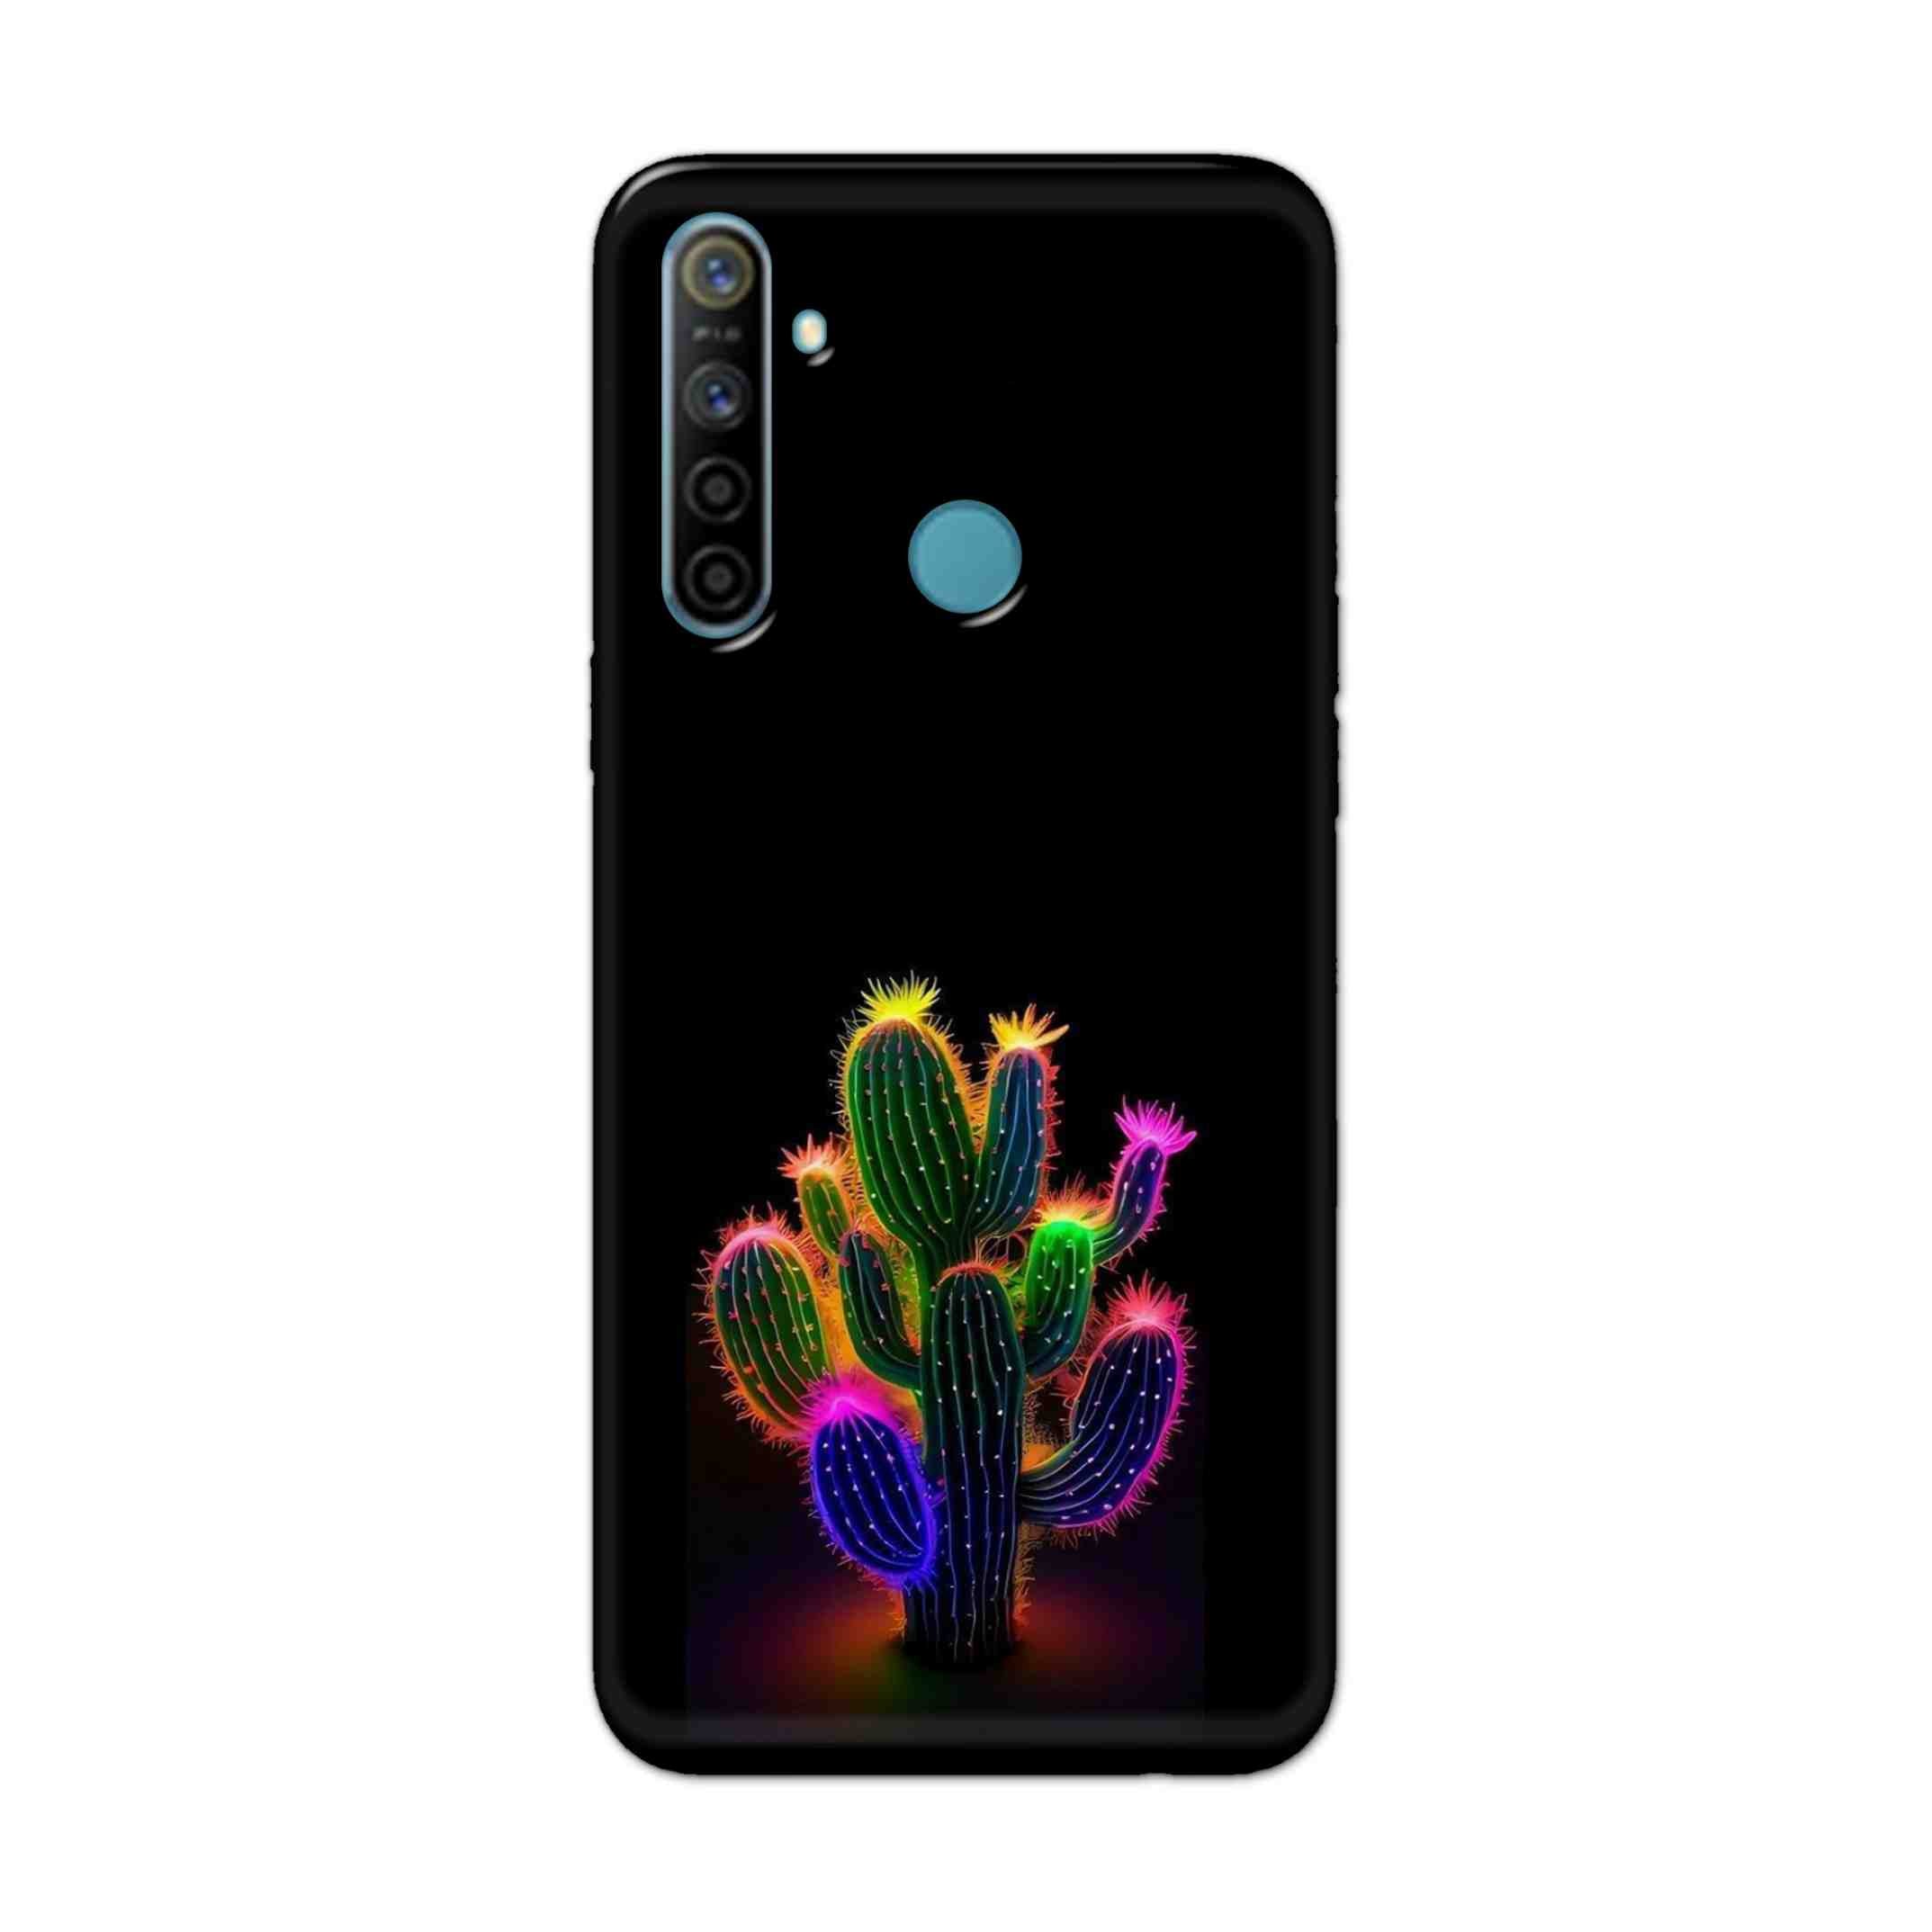 Buy Neon Flower Hard Back Mobile Phone Case Cover For Realme 5i Online